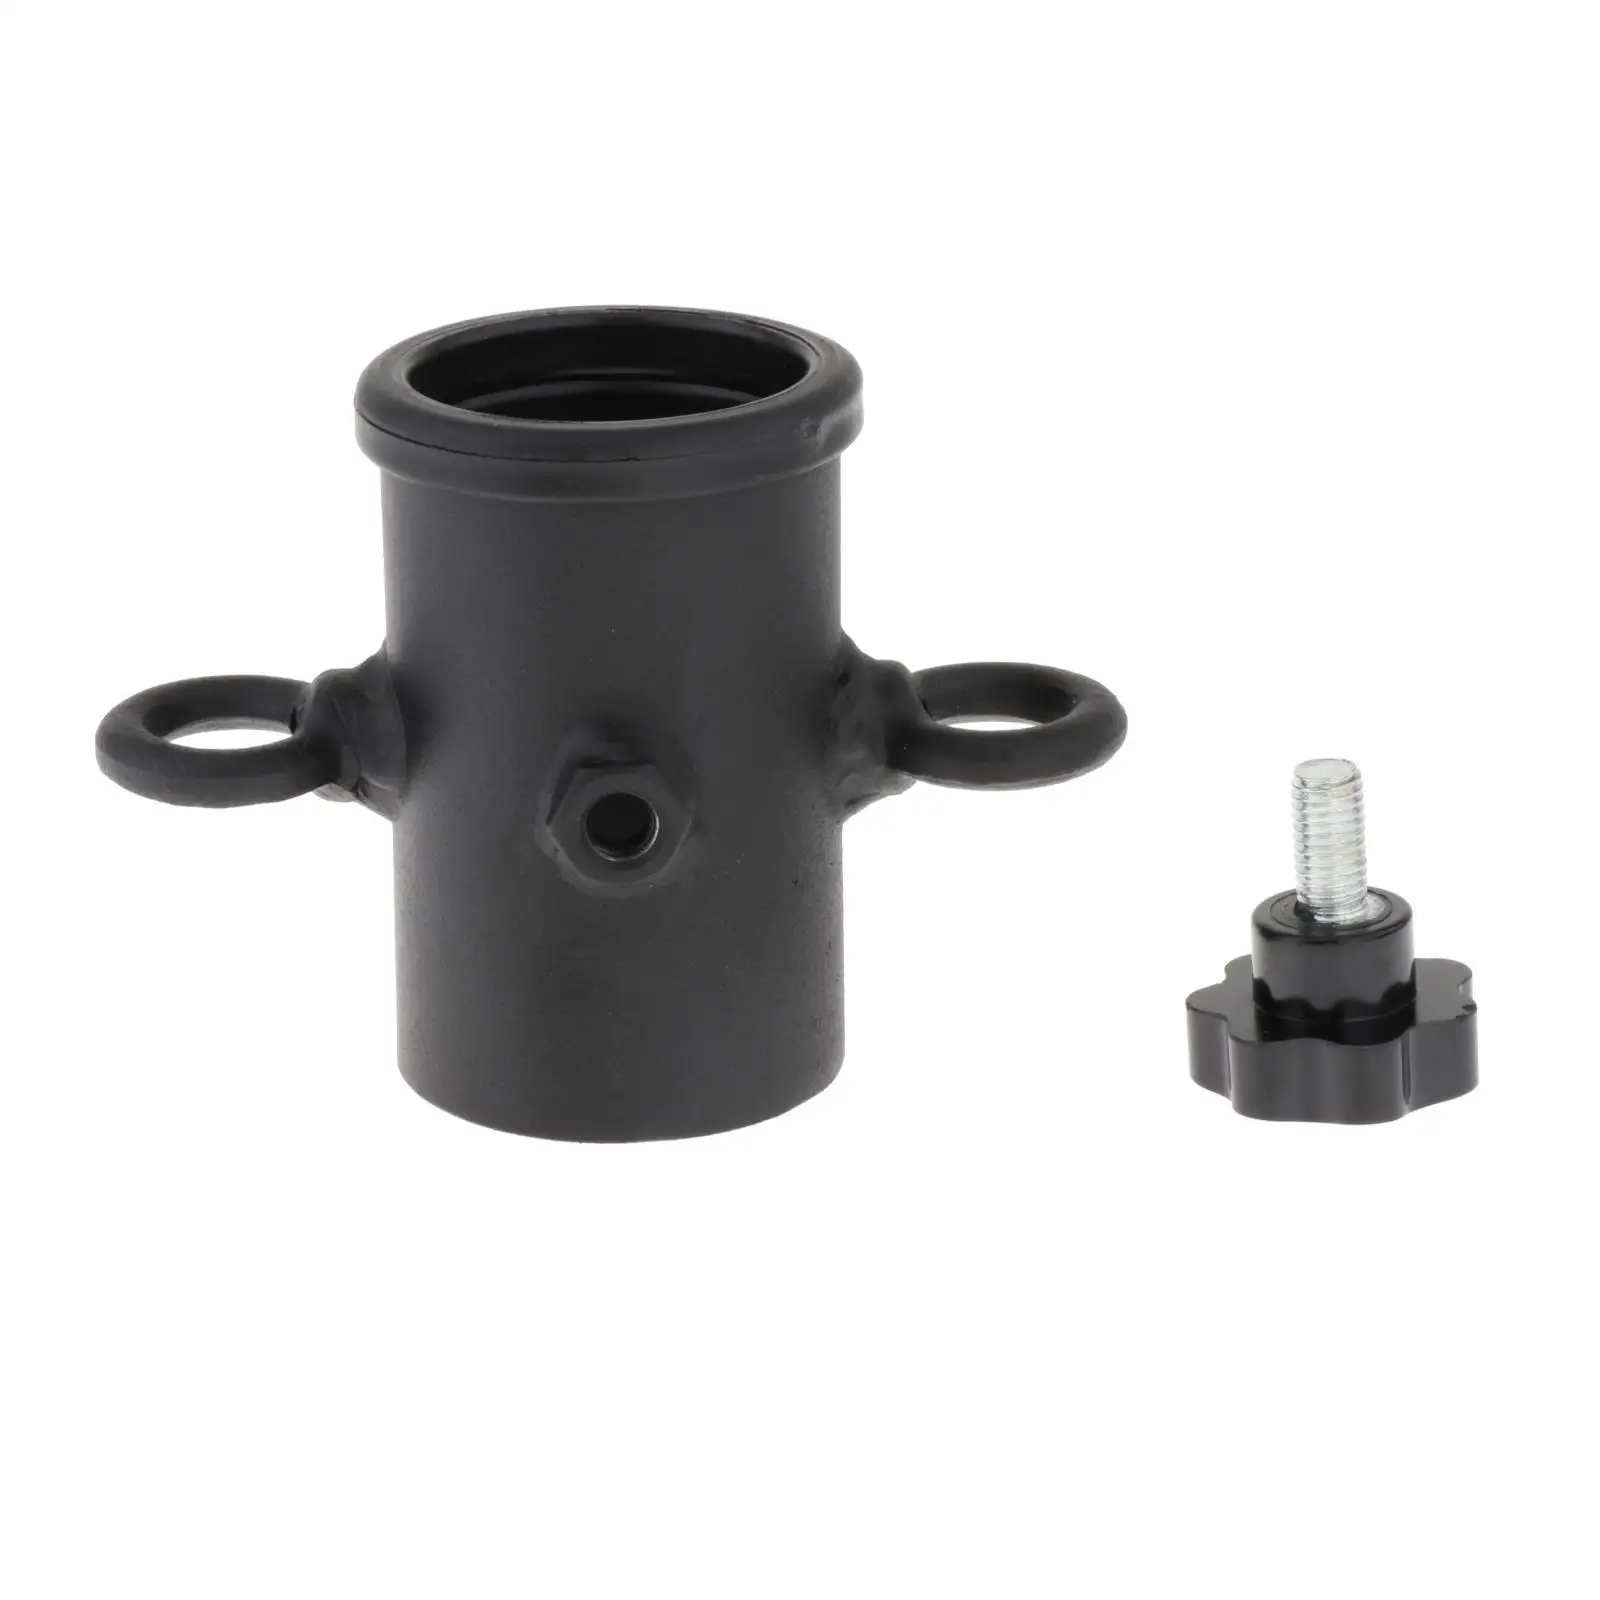 Steel Dumbbell Landmine Eyelet Attachment Fit 2 inch Barbell Bars Sleeve for